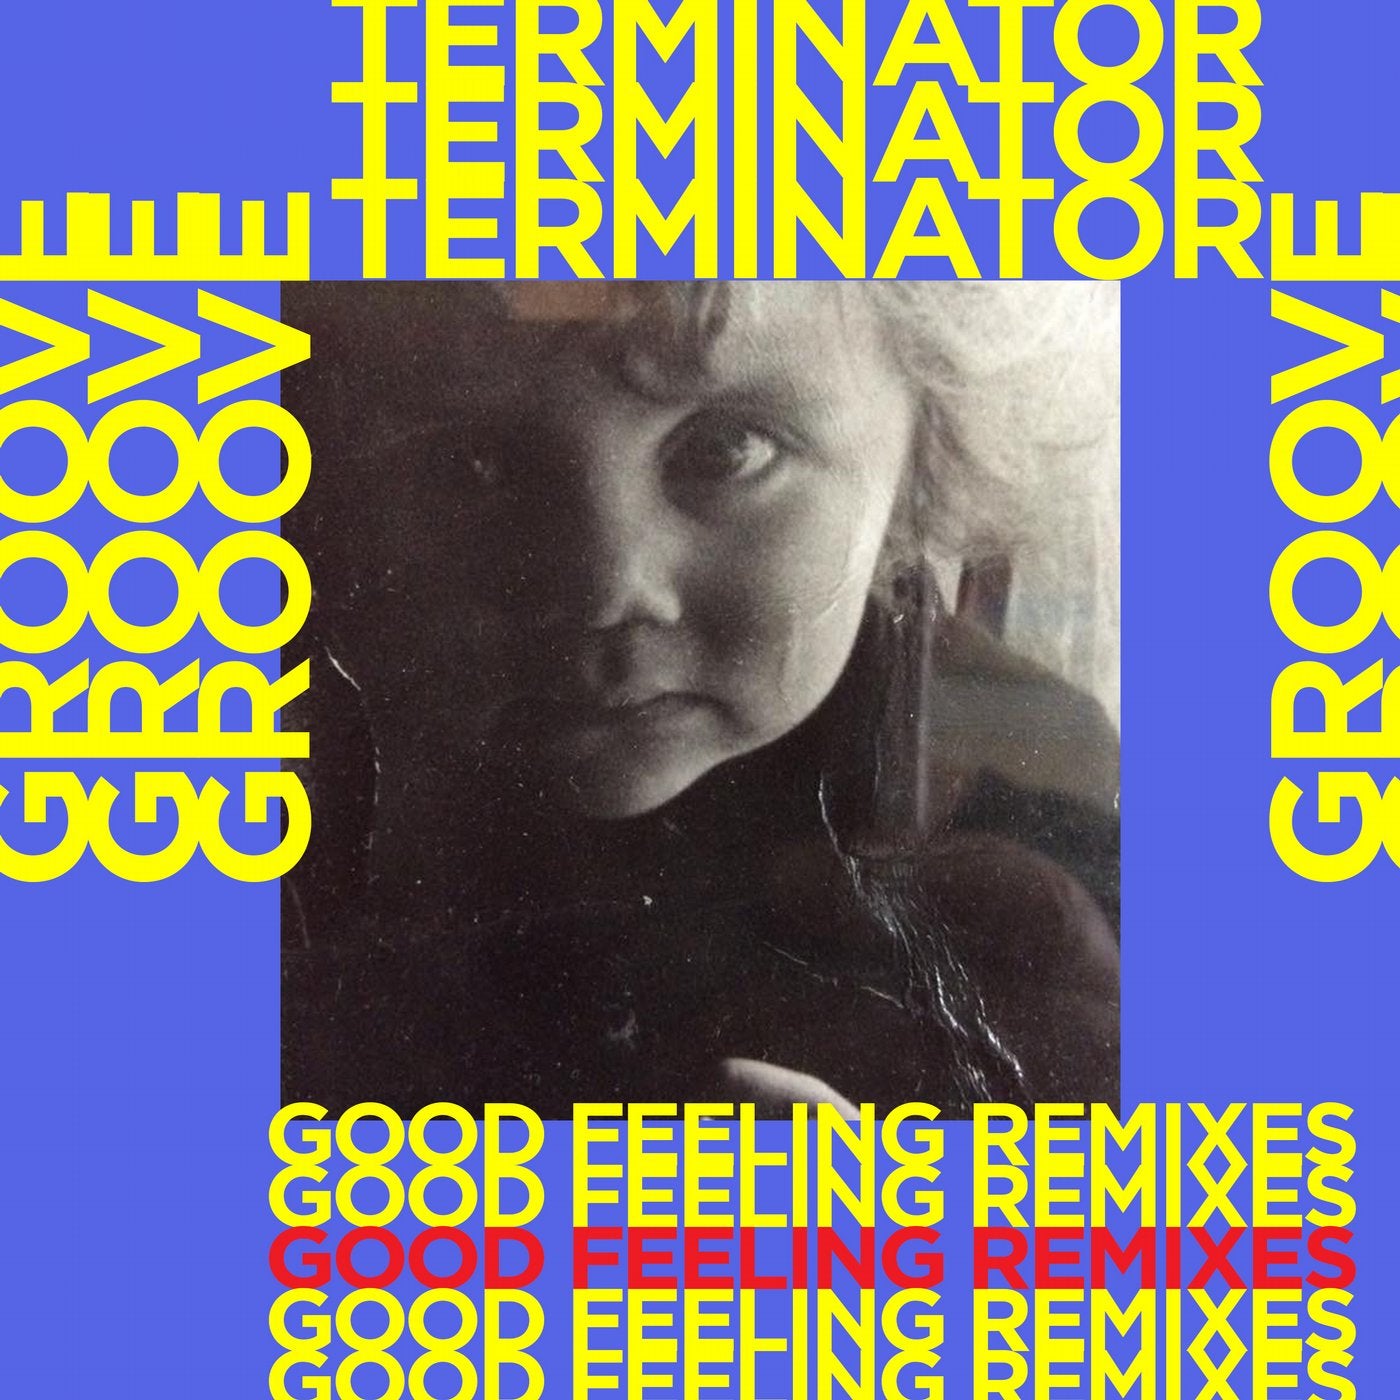 This feeling remix. Feeling good (песня). Good feeling. This feeling Remake.